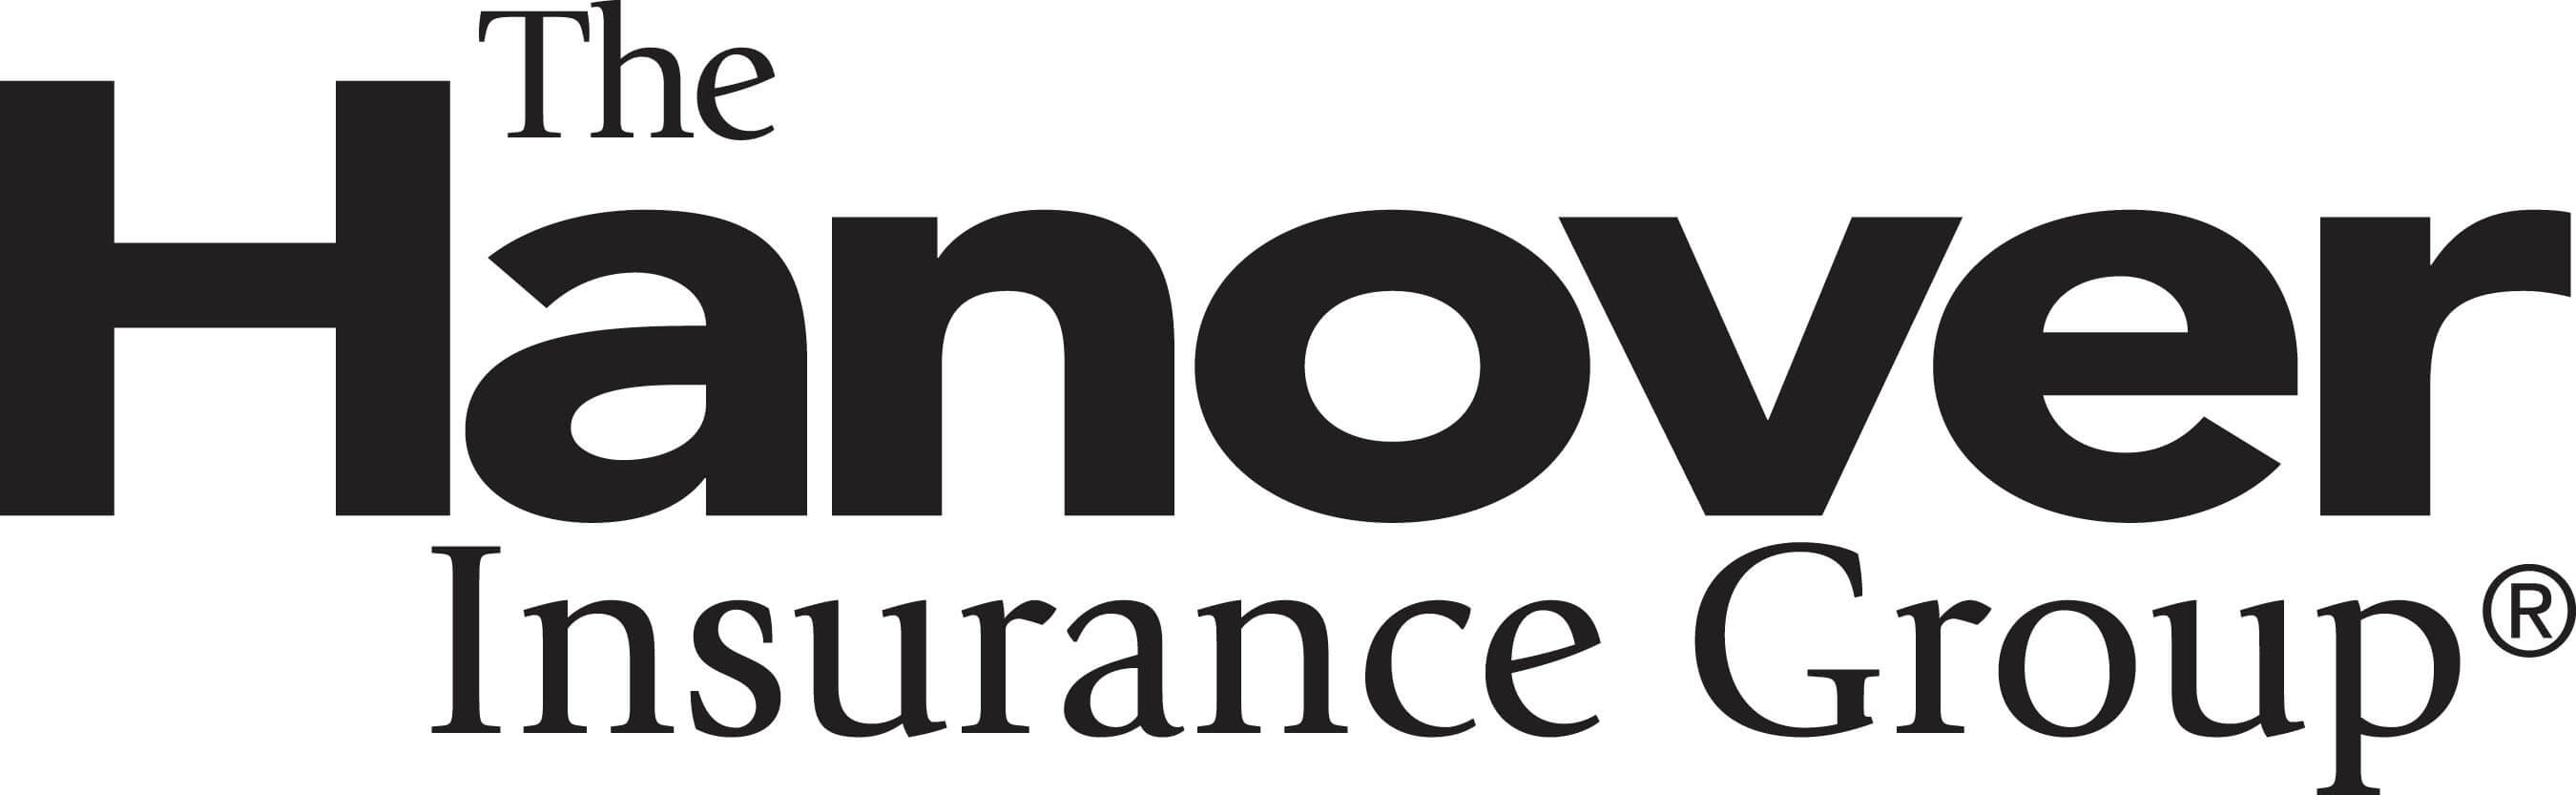 Hanover Logo - THE HANOVER INSURANCE GROUP, INC. LOGO